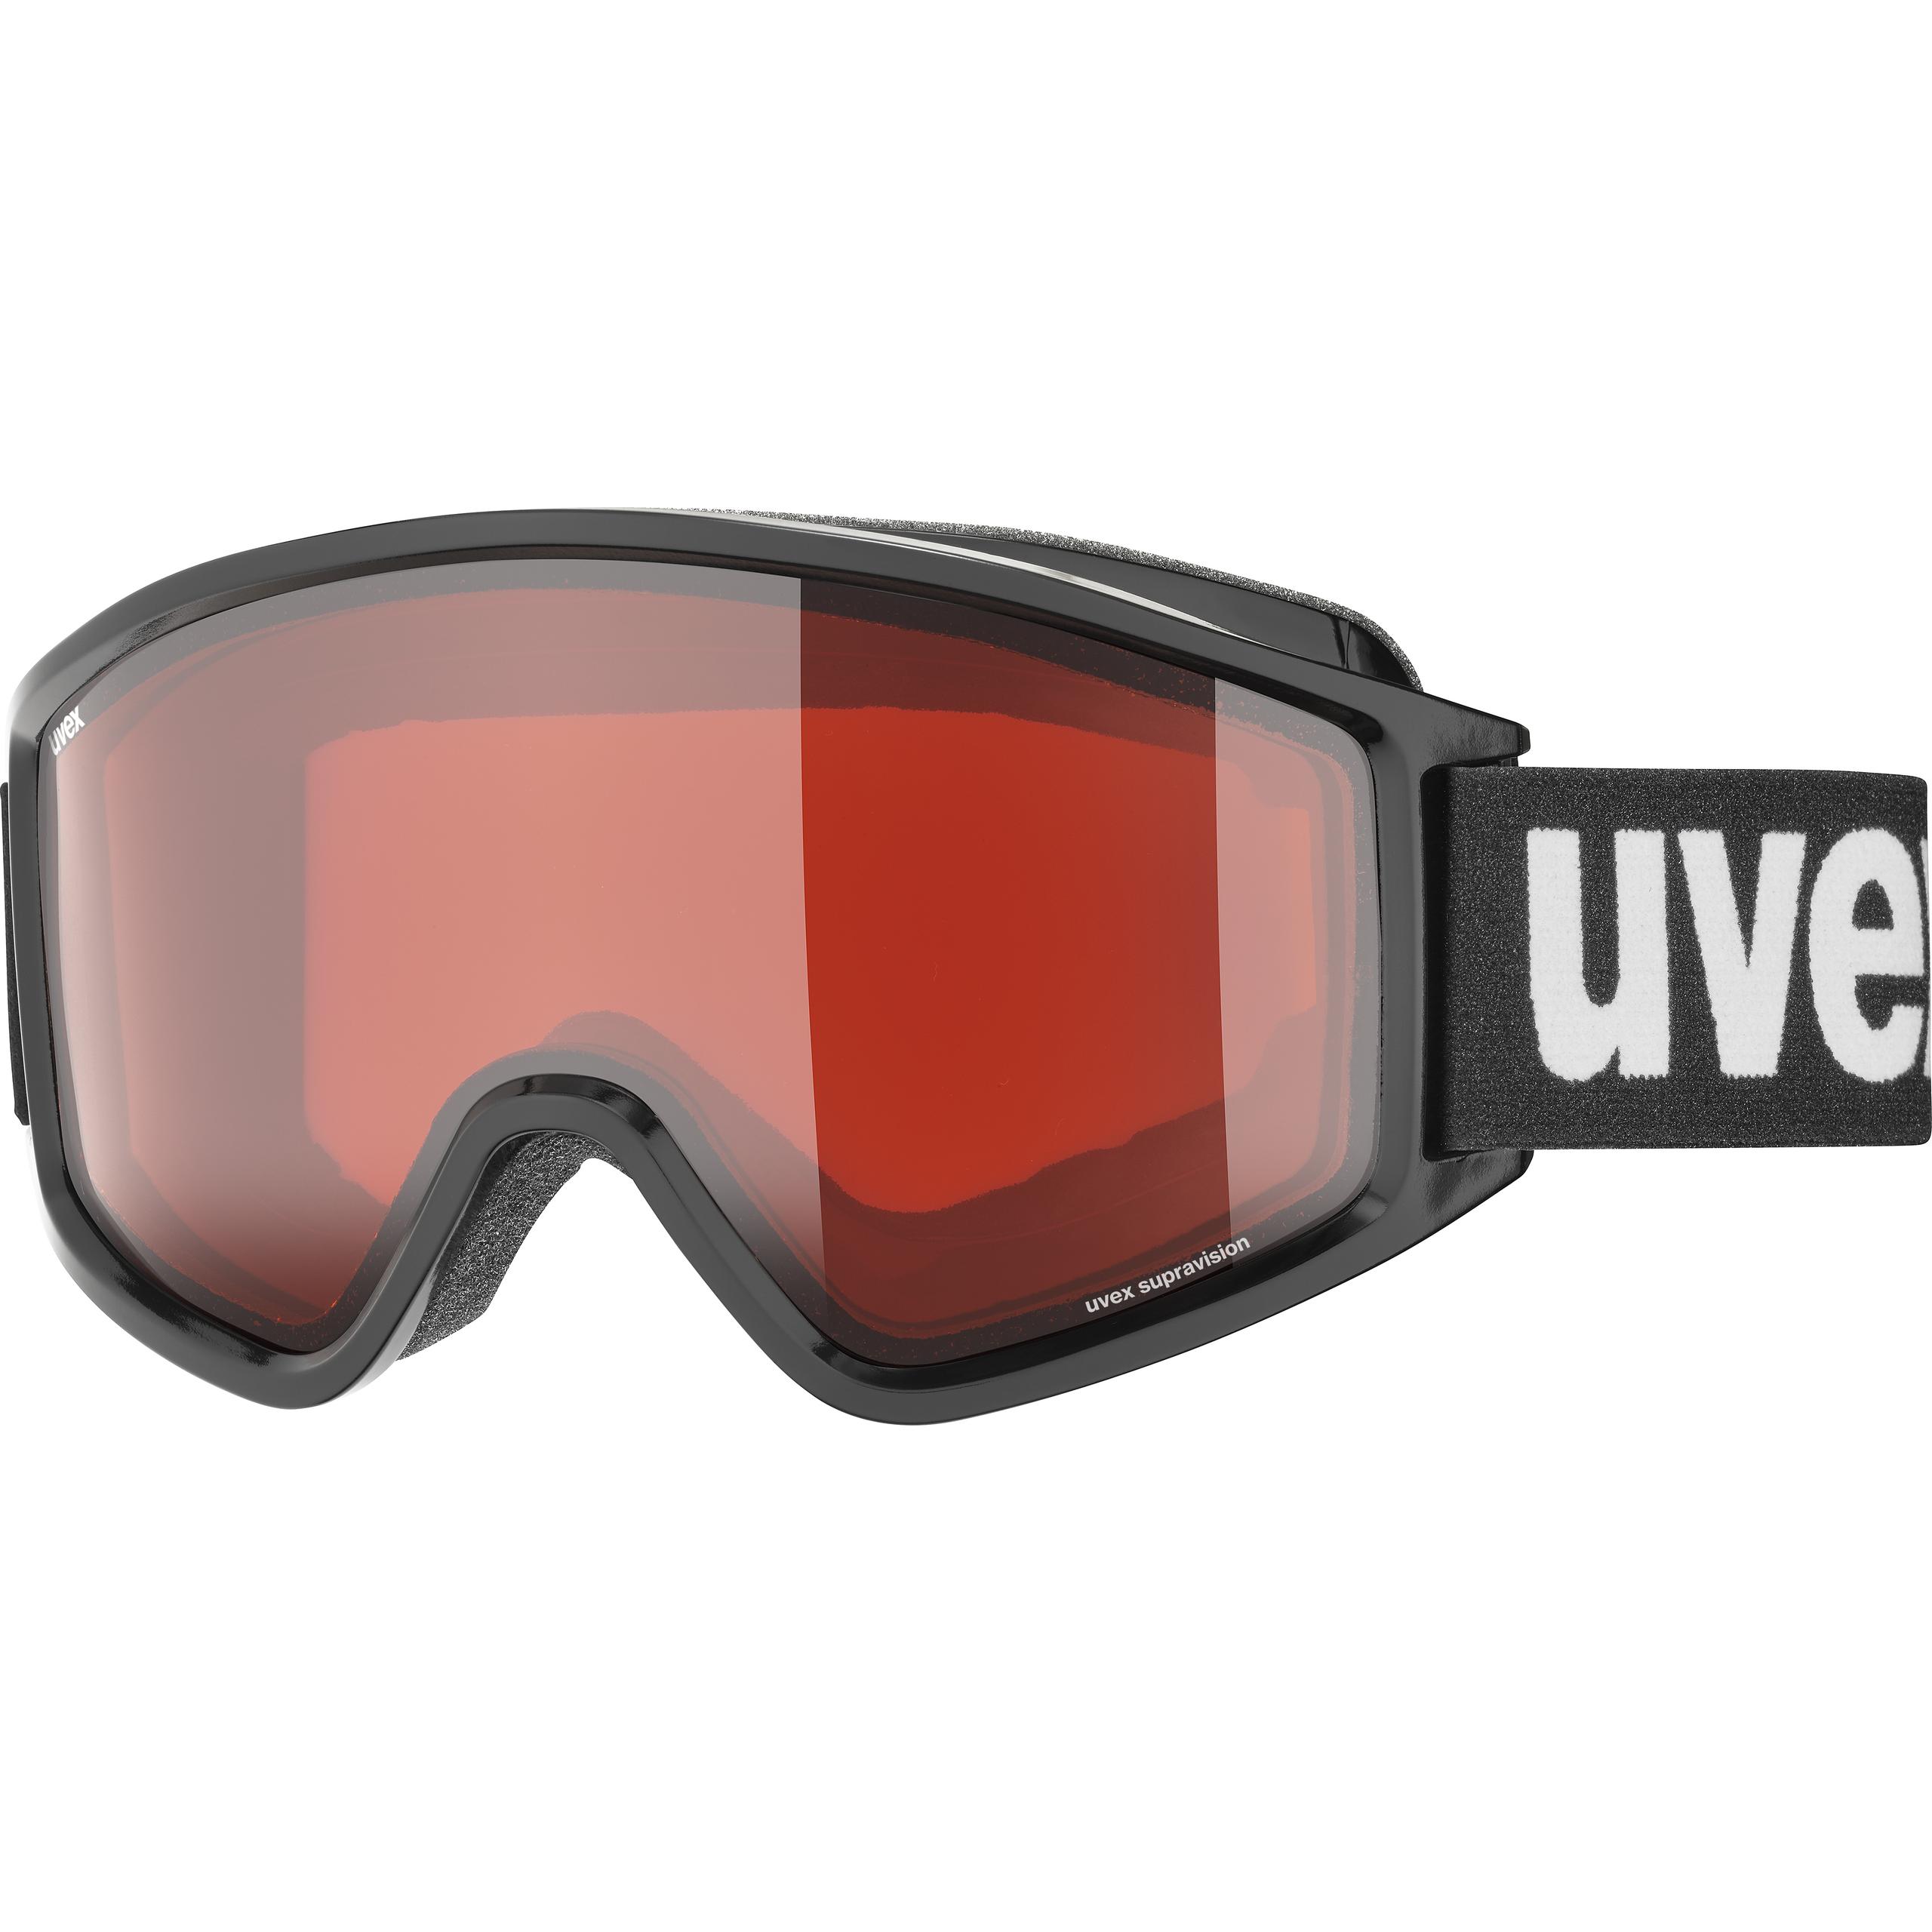 uvex g.gl 3000 LGL Skibrille Unisex Snowboardbrille Schnee Ski Brille S55133521 